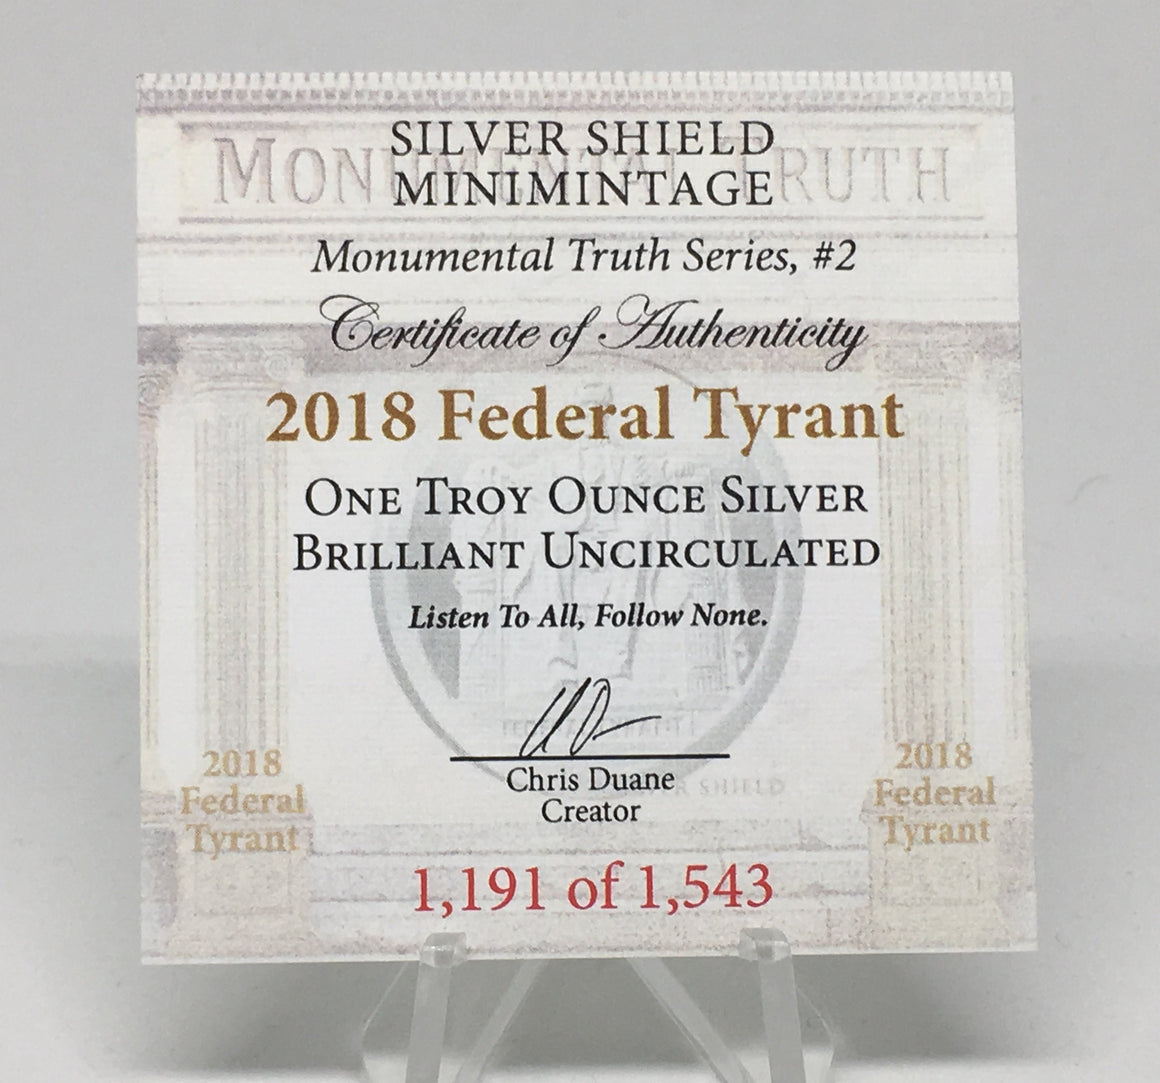 2018 Federal Tyrant by Silver Shield, Mini Mintage - BU 1 oz .999 Silver Round